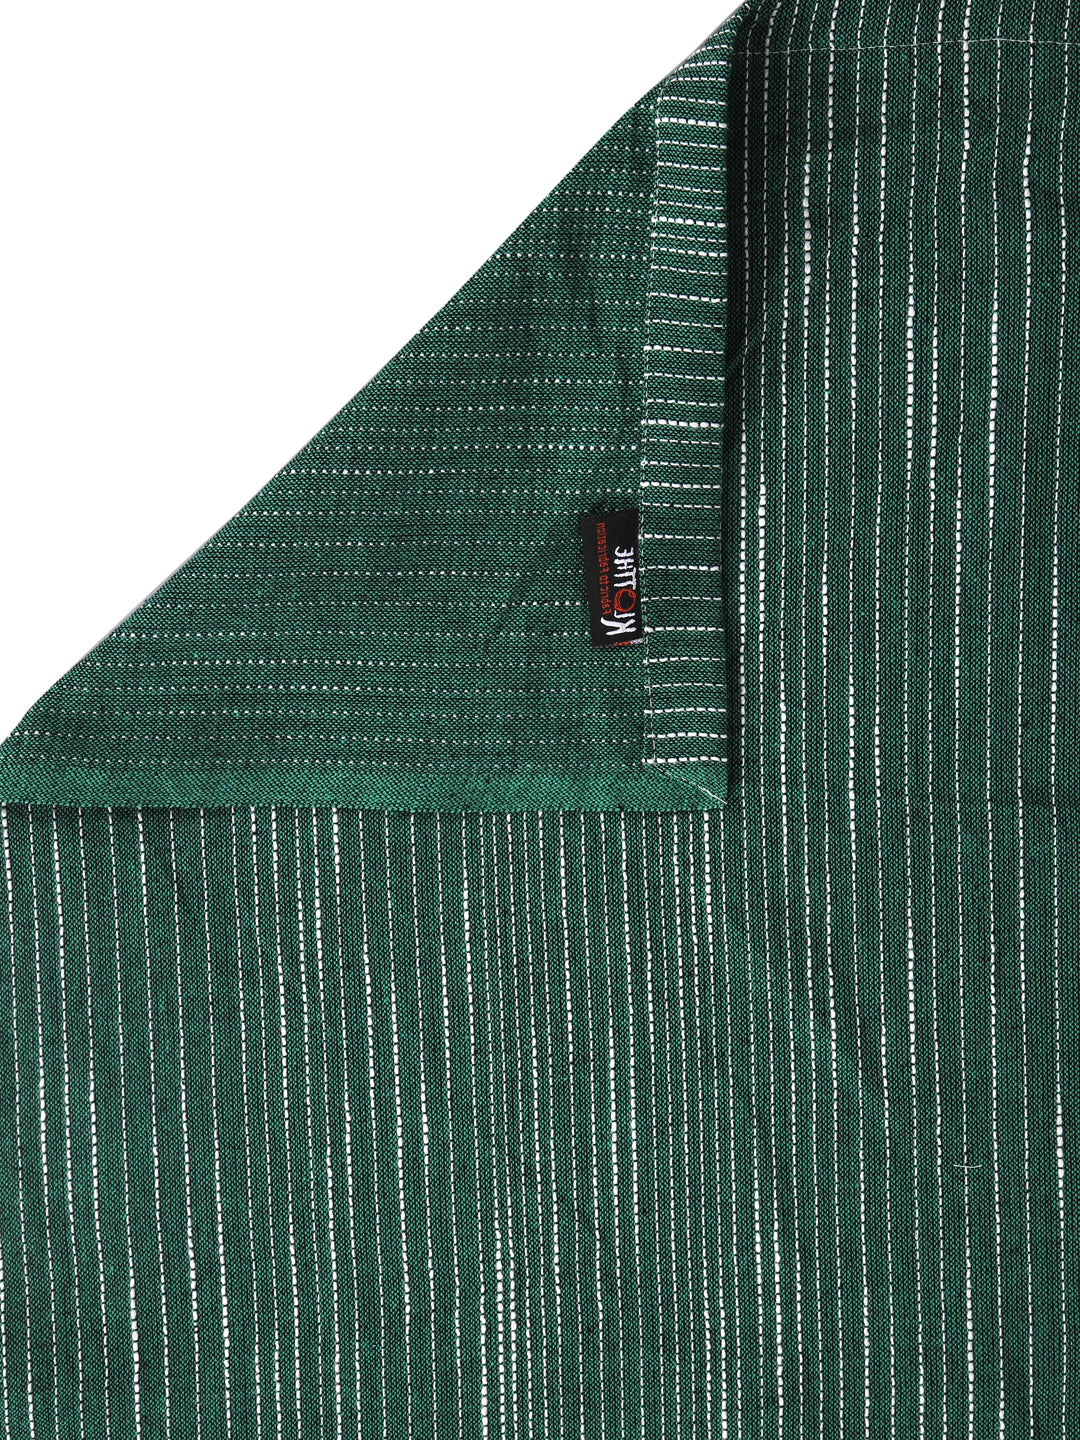 KLOTTHE Green Cotton Striped Diwan Set